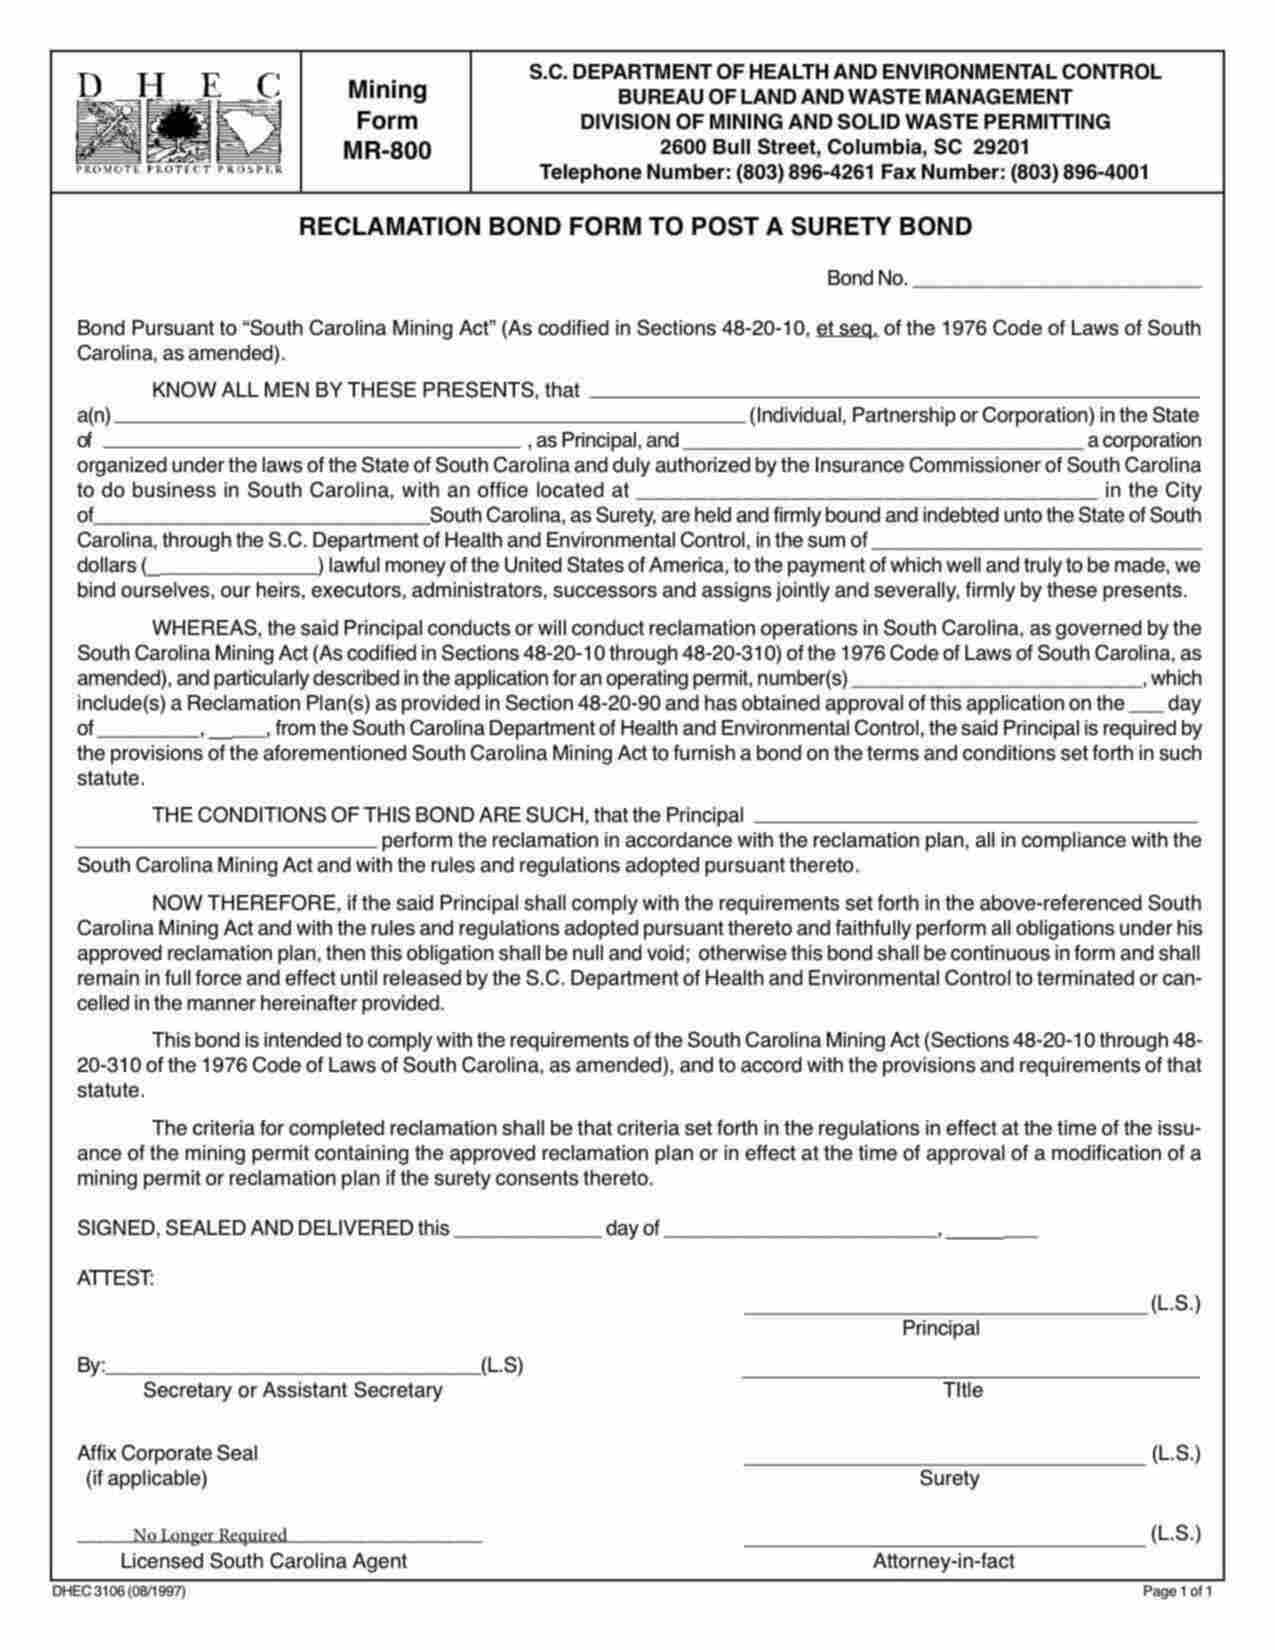 South Carolina Reclamation Bond Form